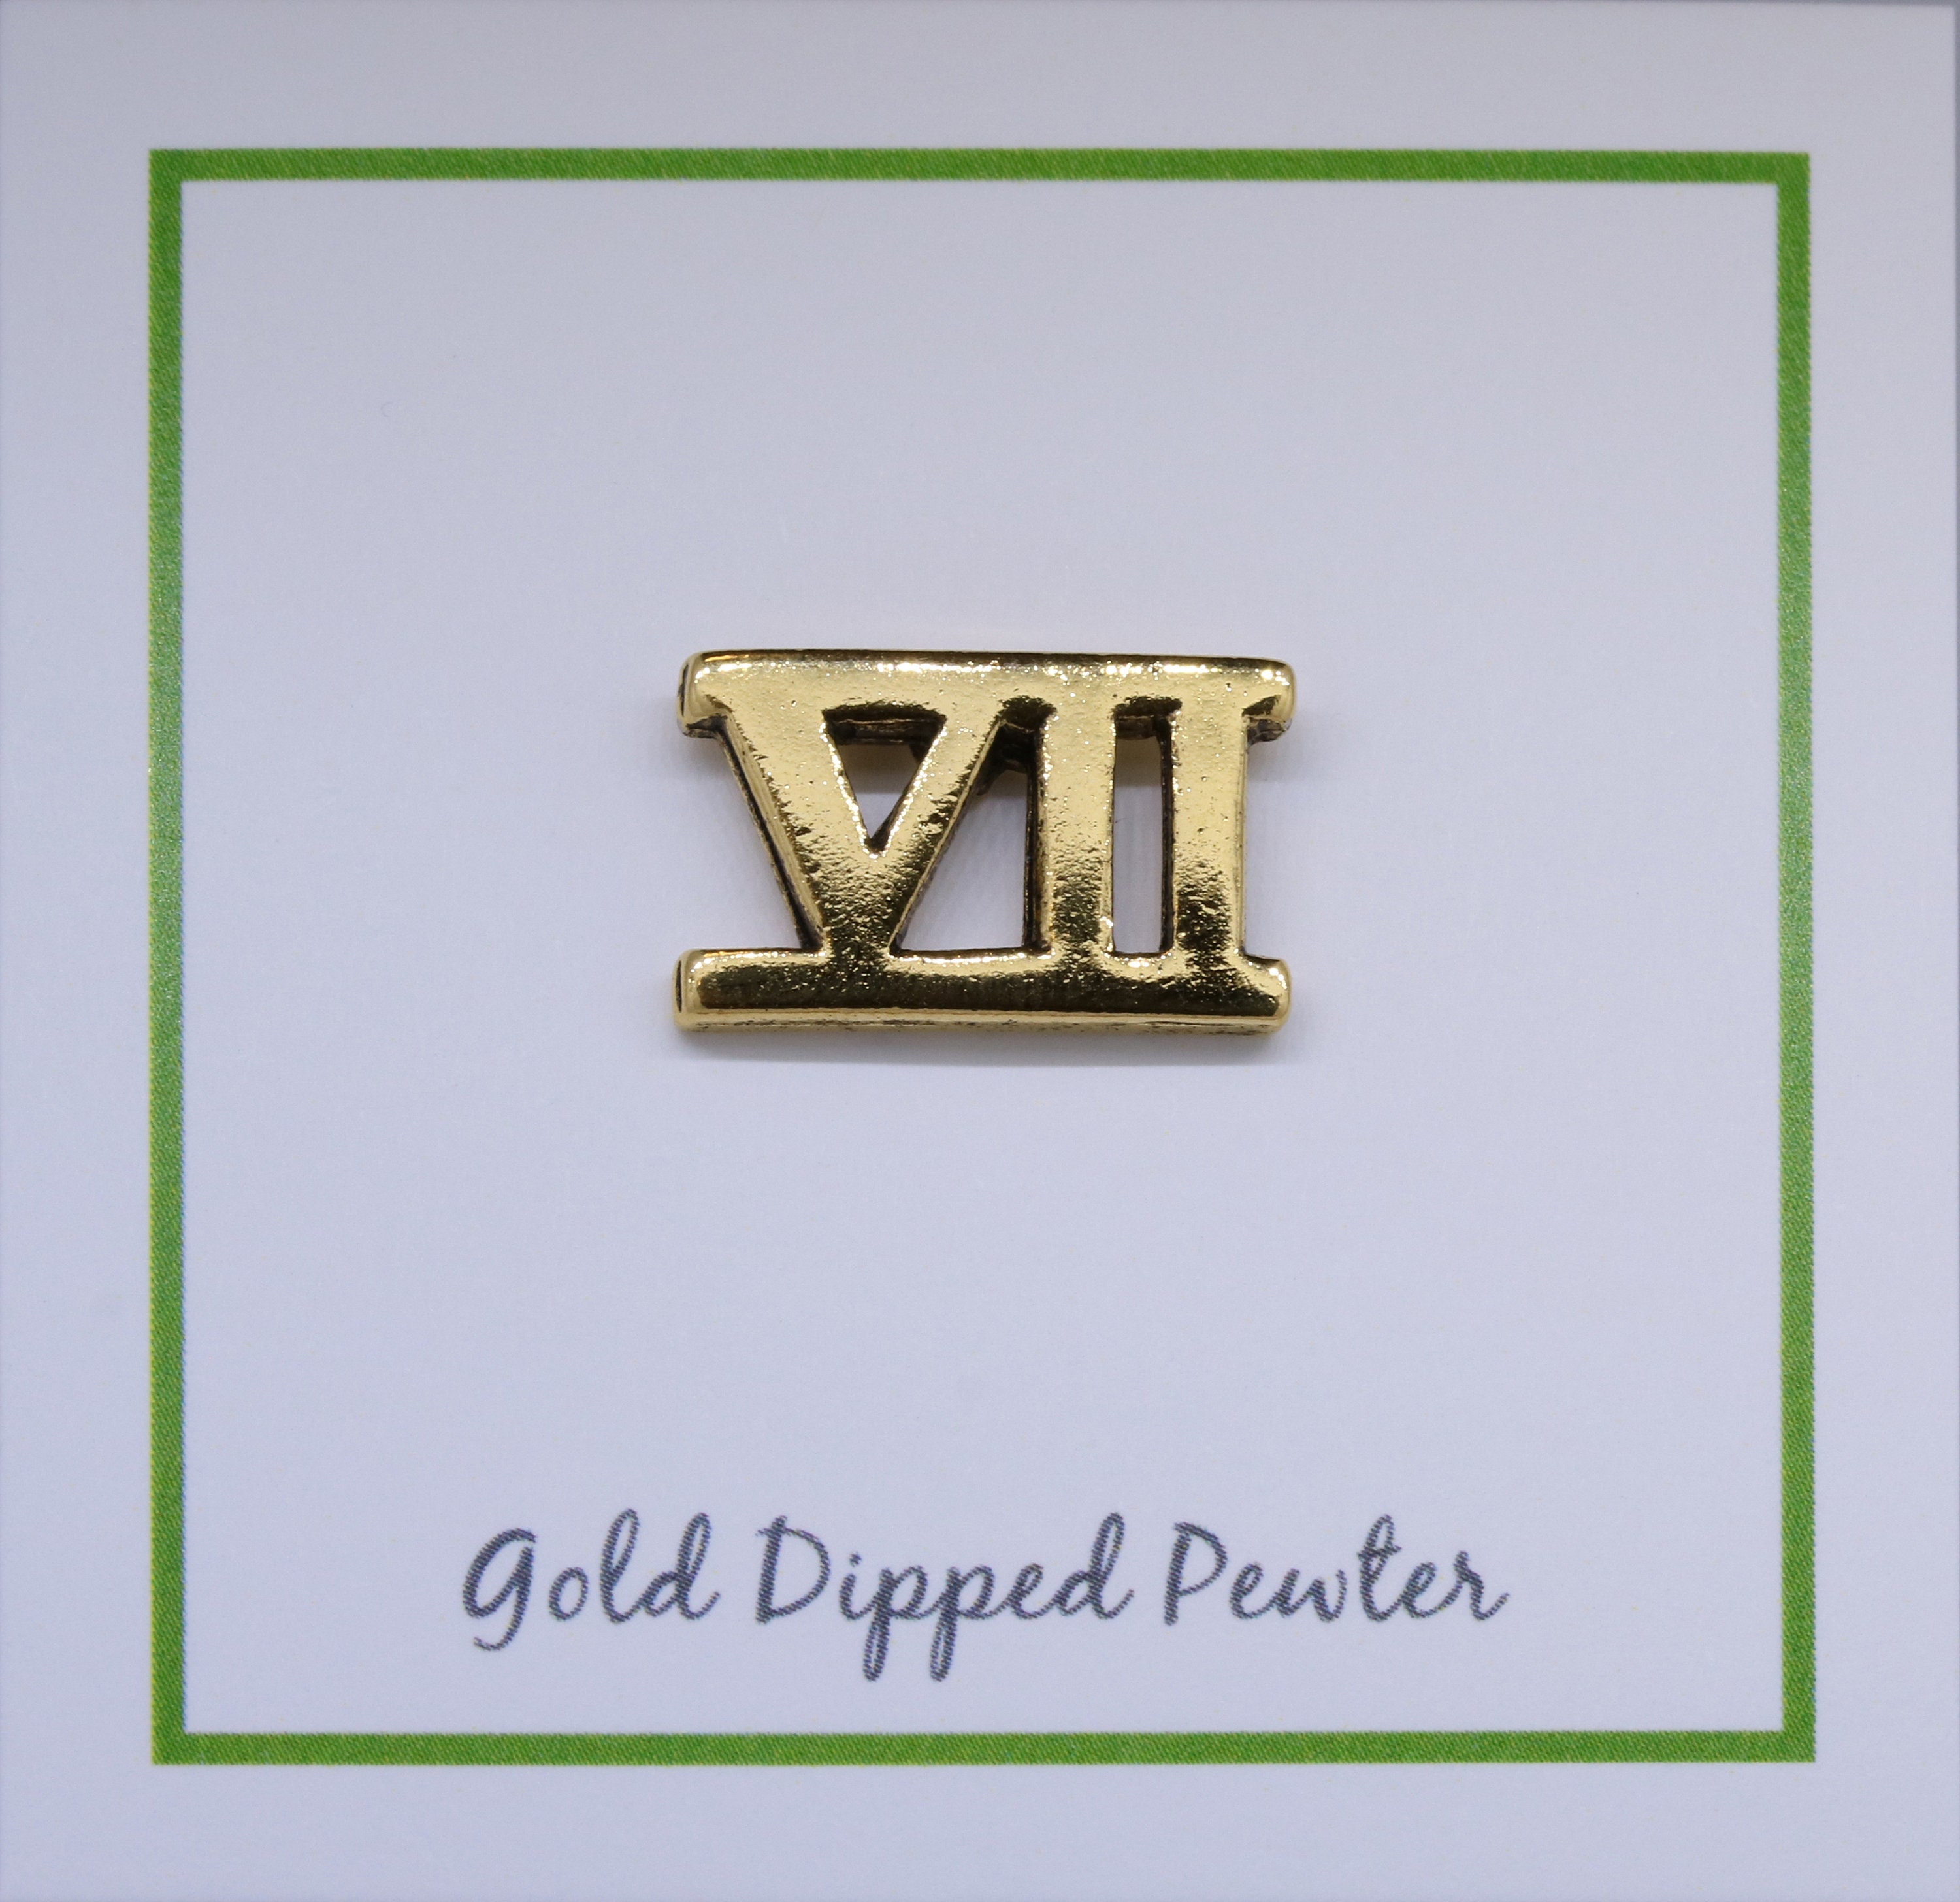 IV Gold Dipped Pewter Lapel Pin Cc609g-iv-roman Numerals 4 